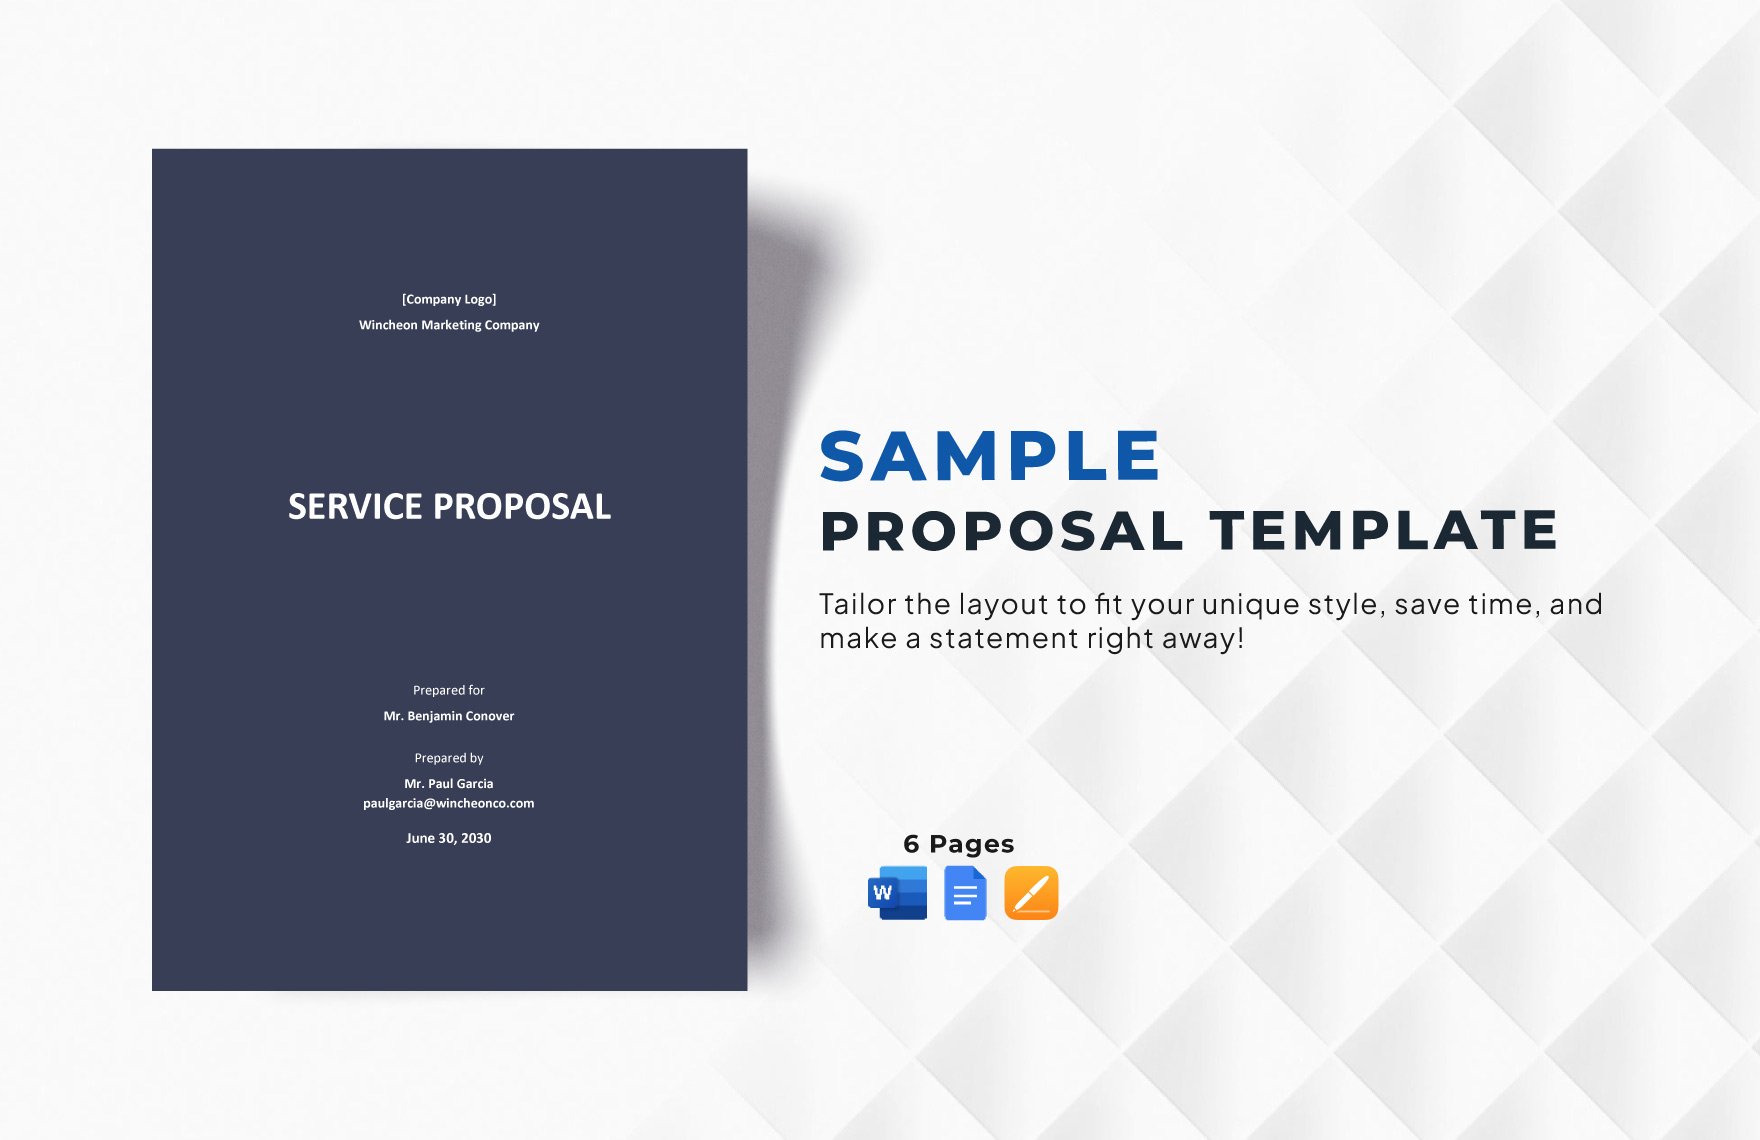 Sample Proposal Template